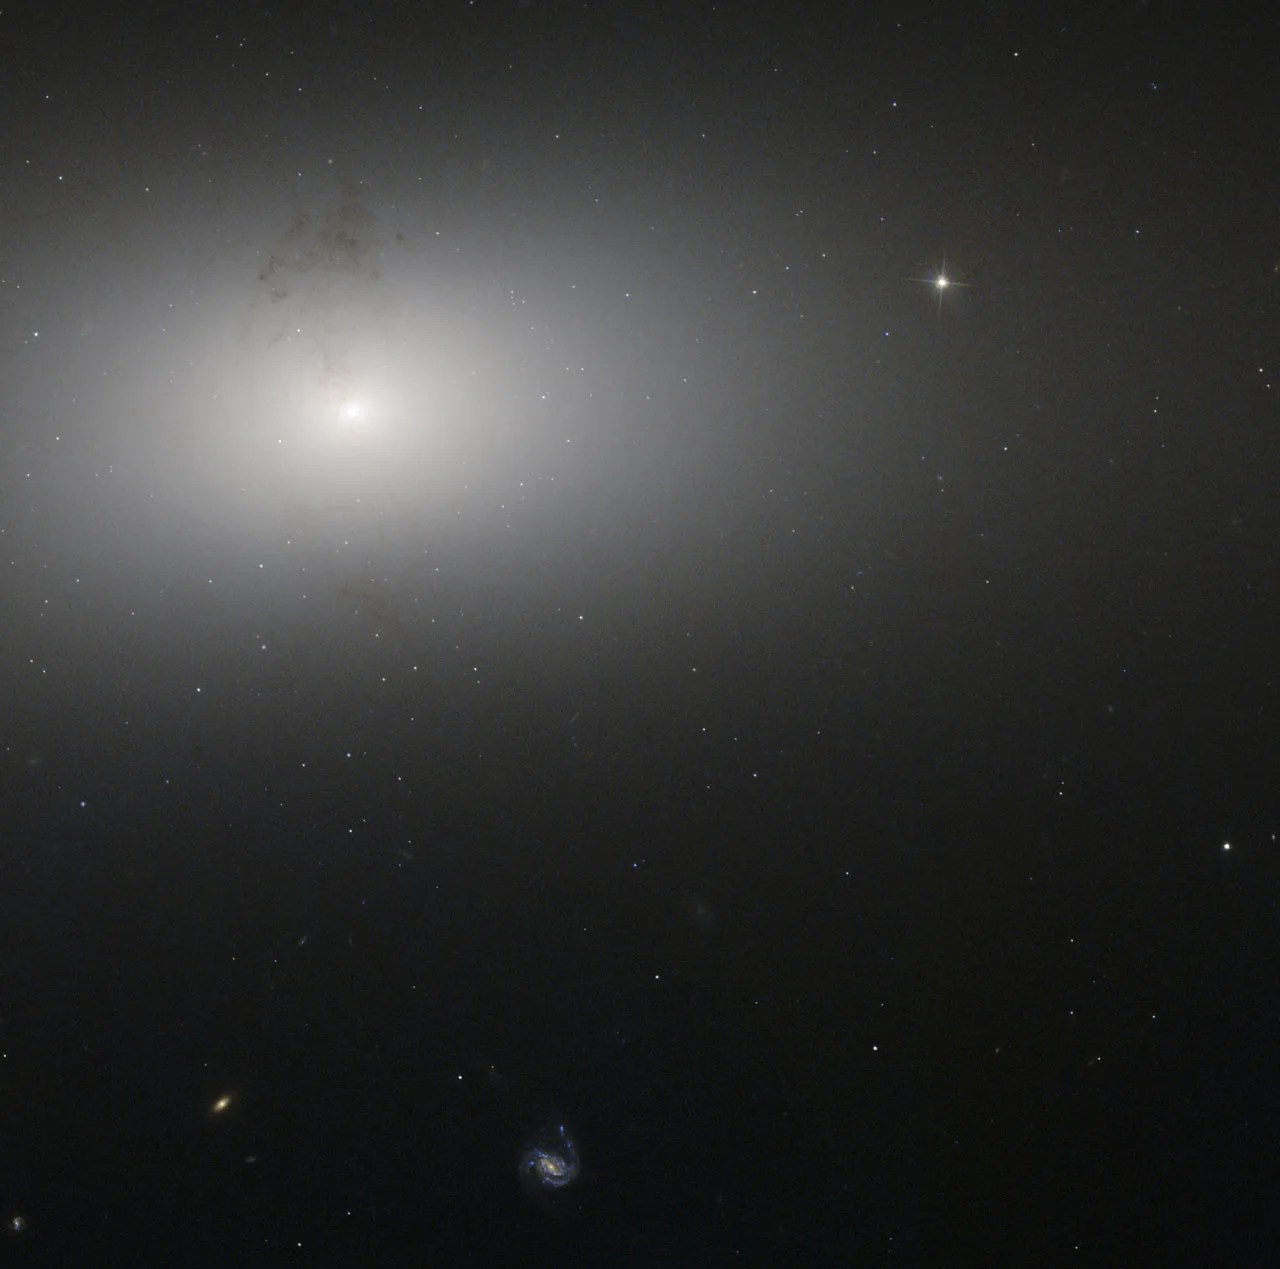 Hubble catches dusty detail